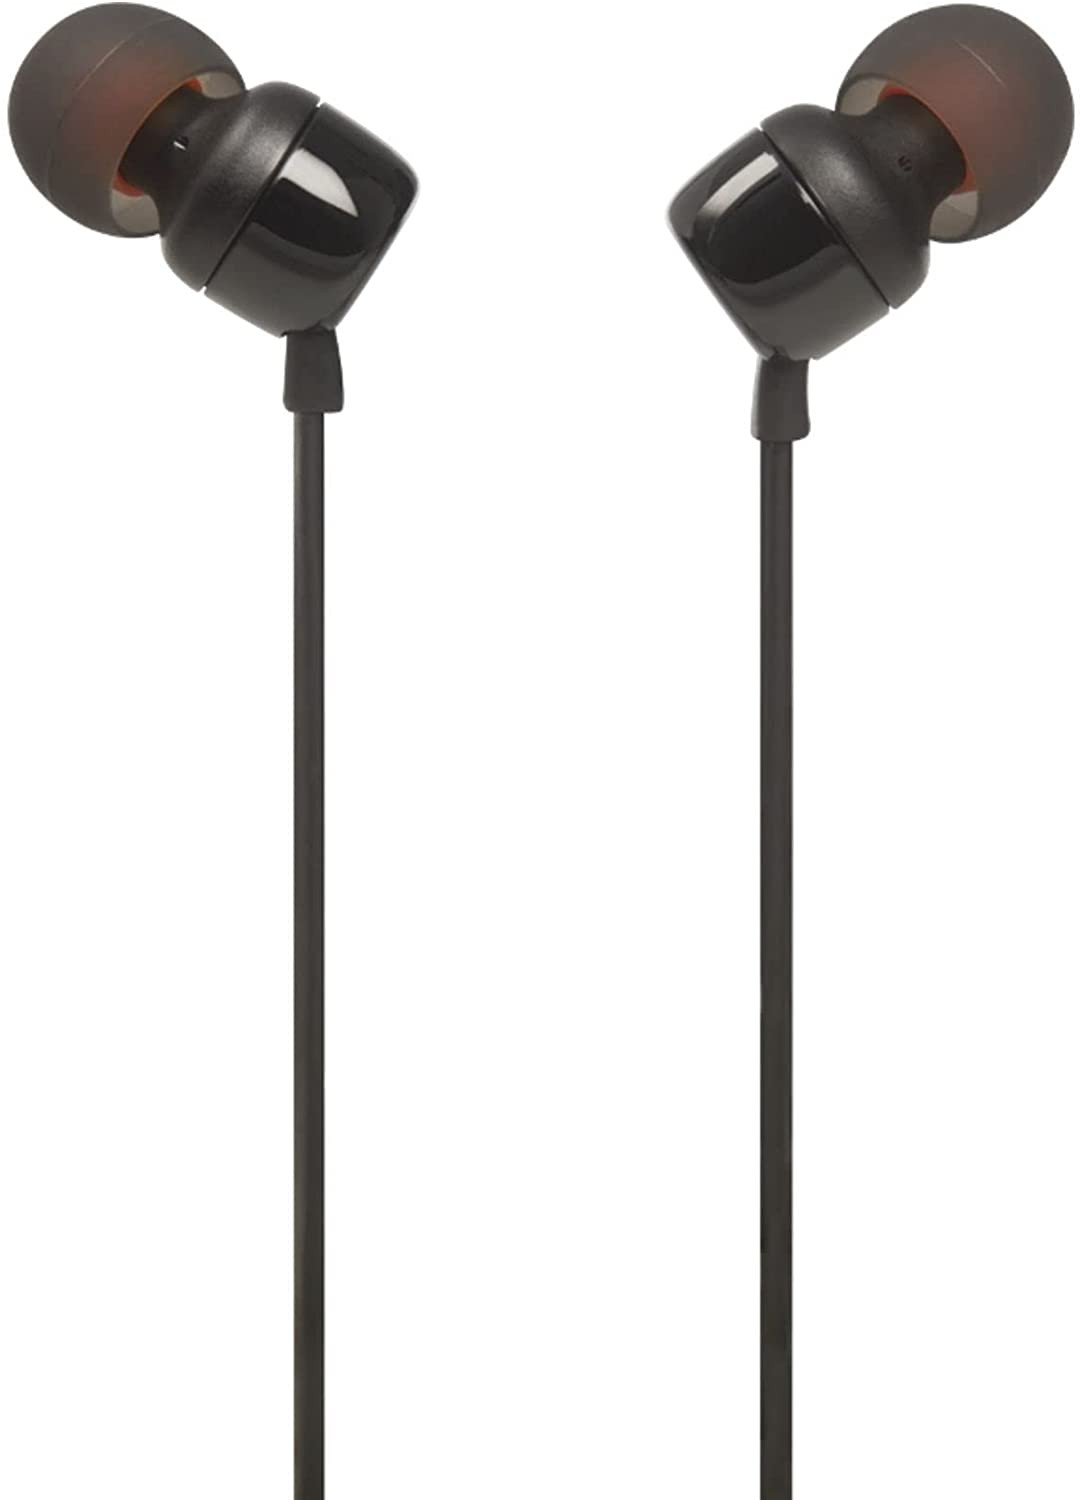 JBL Tune 110 Wired In Ear Headphones - Black